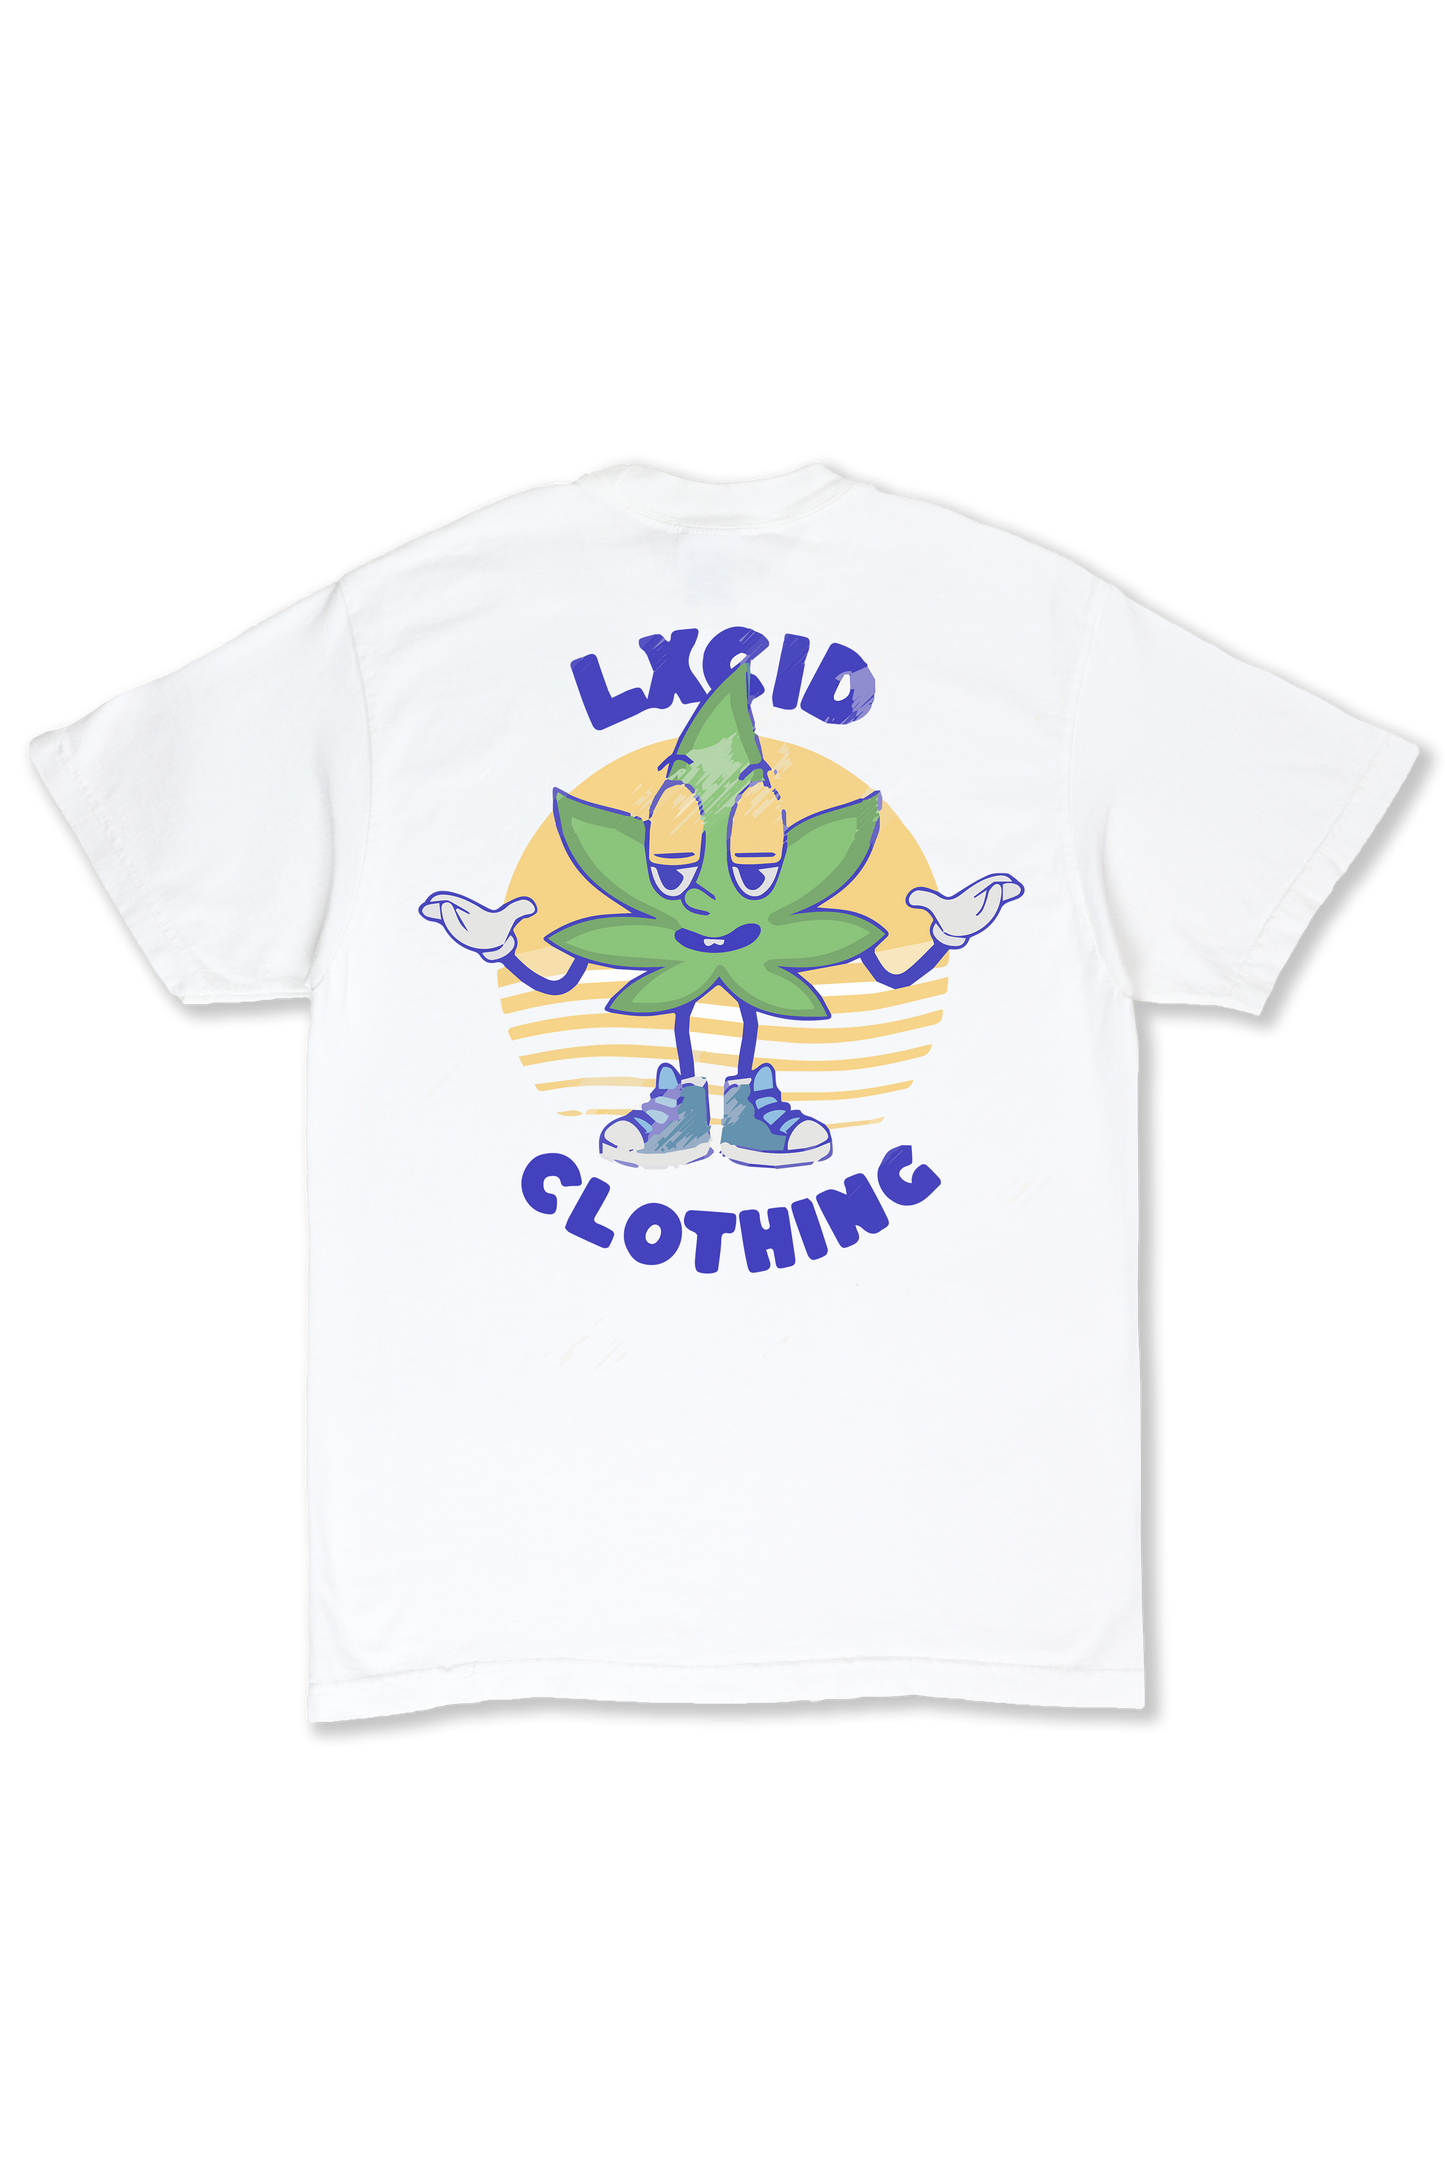 Lxcid w**d T-shirt